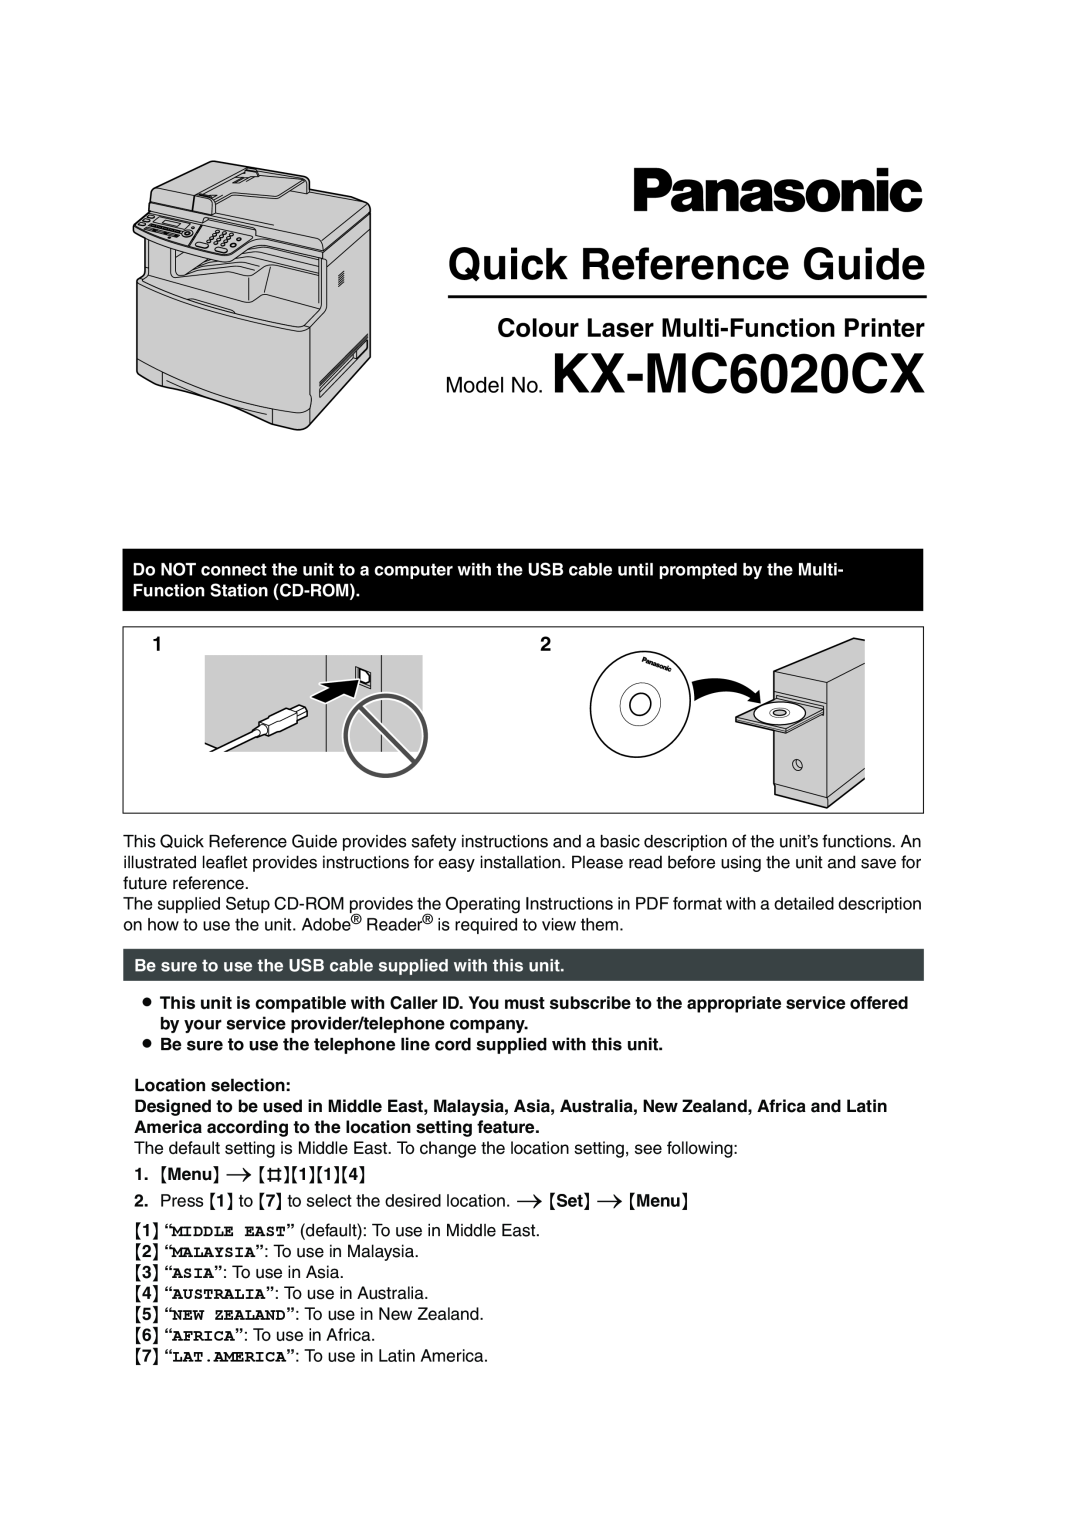 Panasonic KX-MC6020CX operating instructions Colour Laser Multi-Function Printer, Location selection 